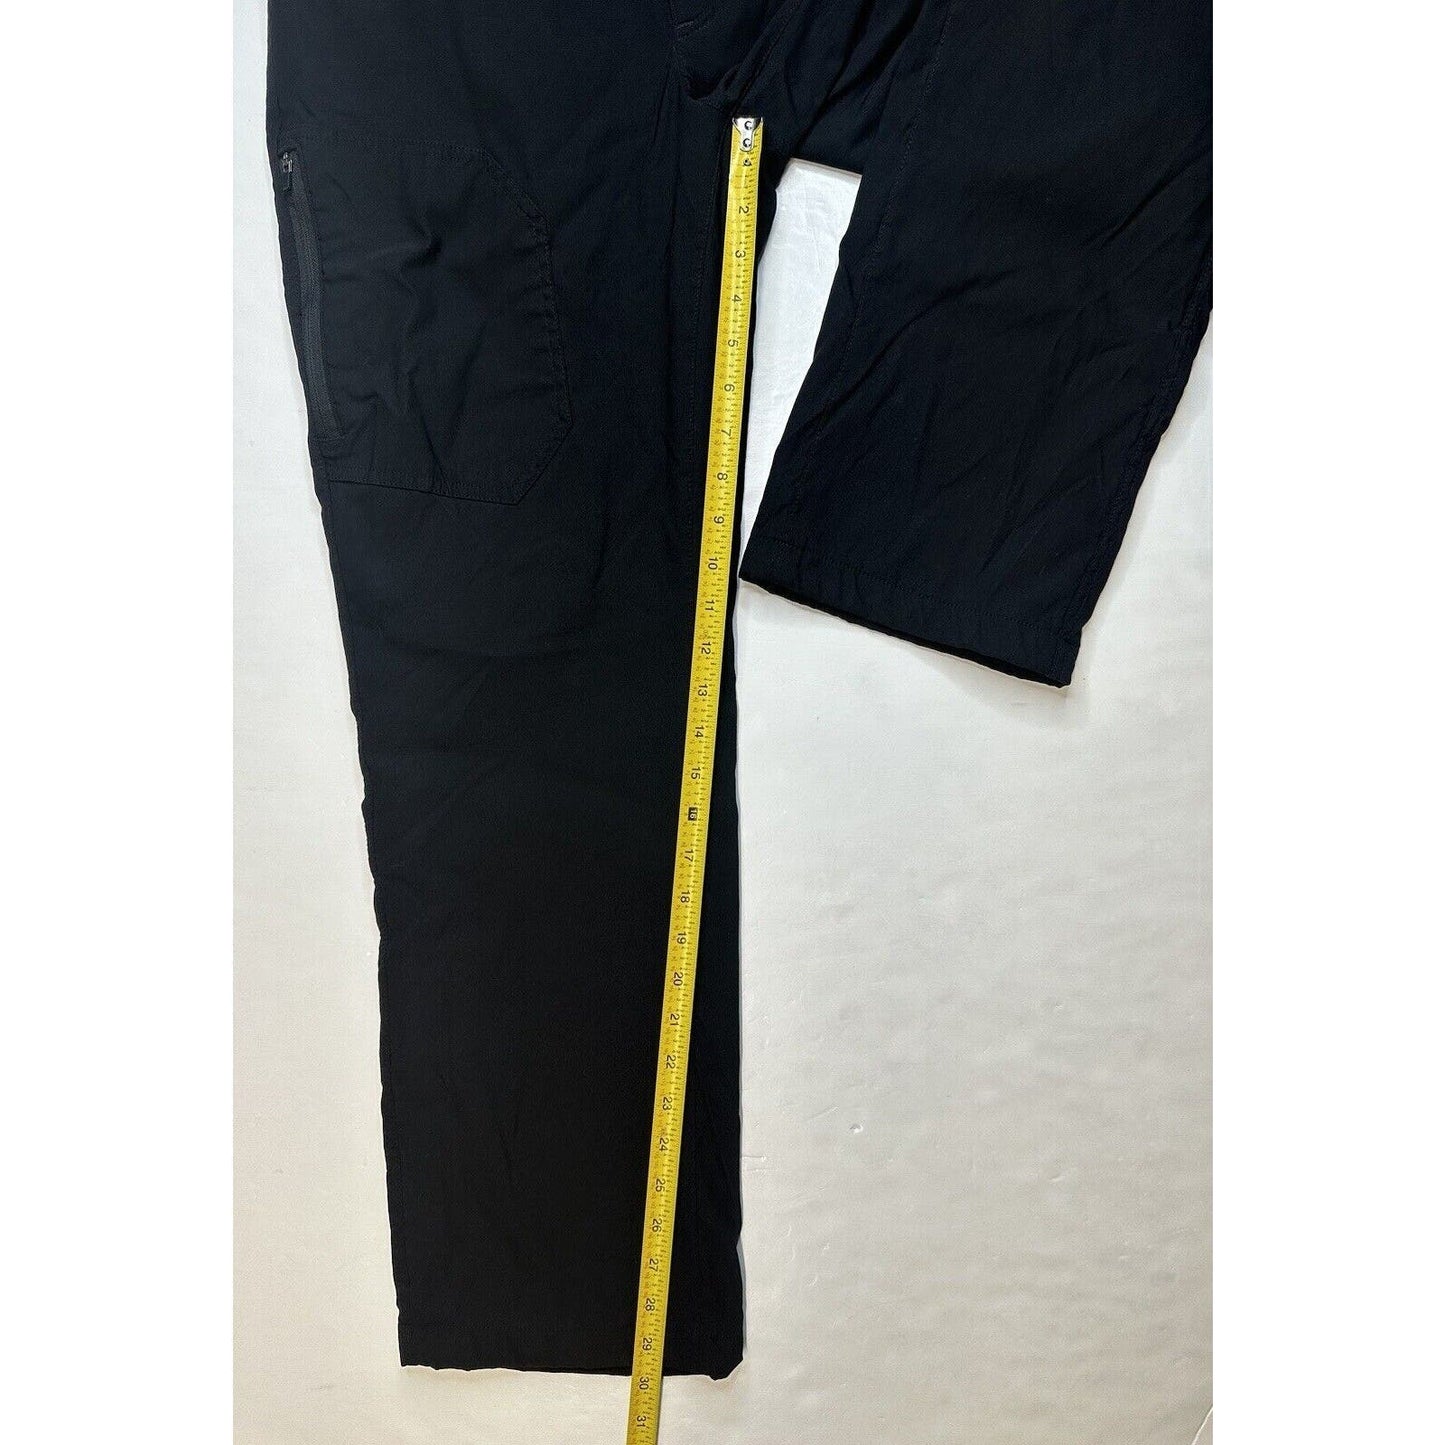 Eddie Bauer Pants Mens 34 Black Fleece Lined Tech Nylon Hiking Outdoor Trail